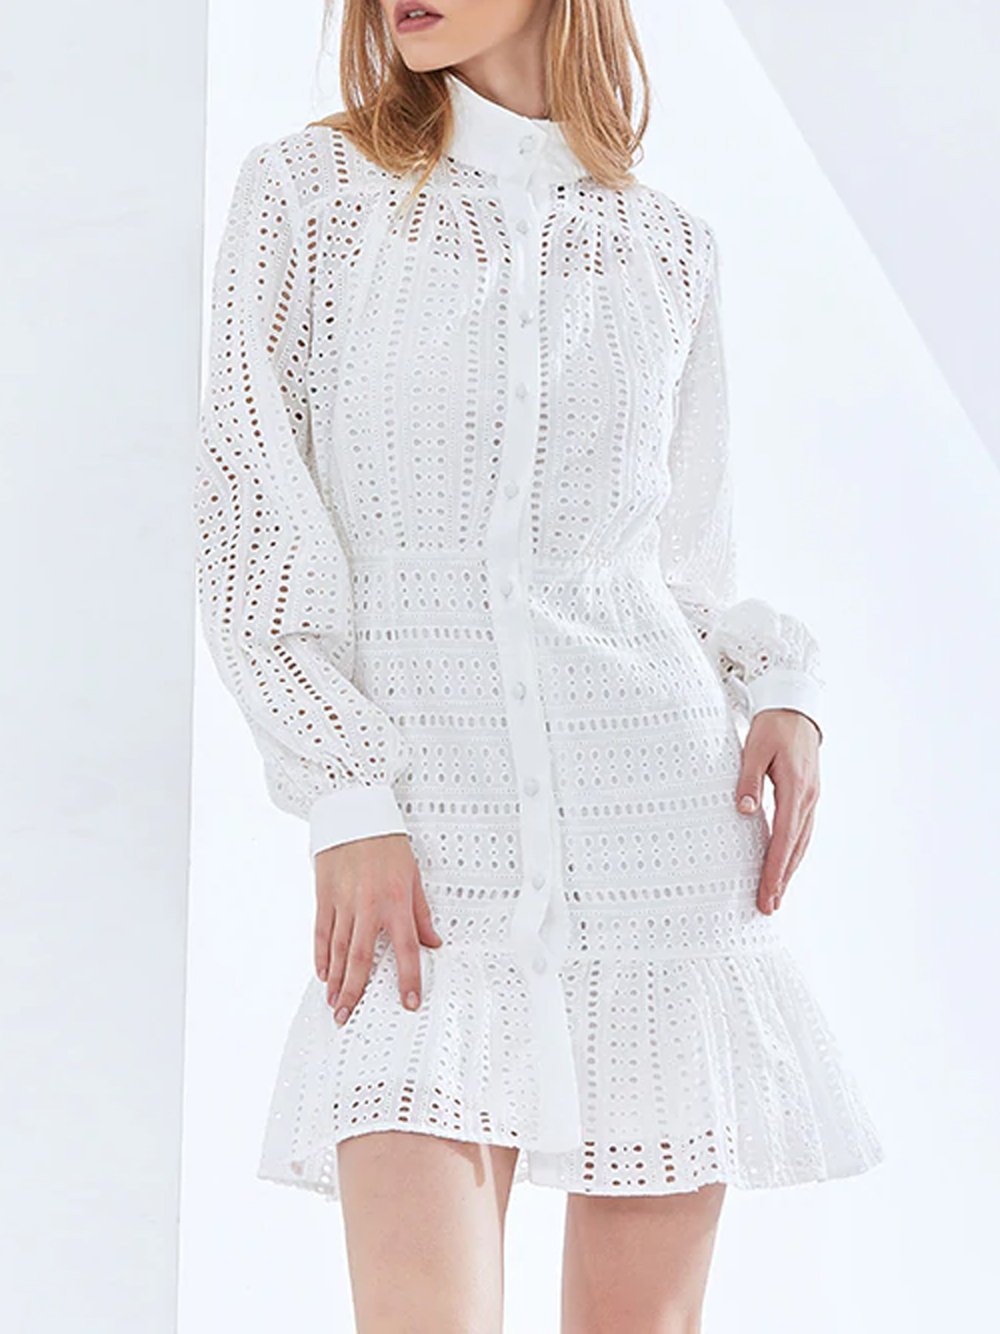 NORA Lace Mini Dress in White